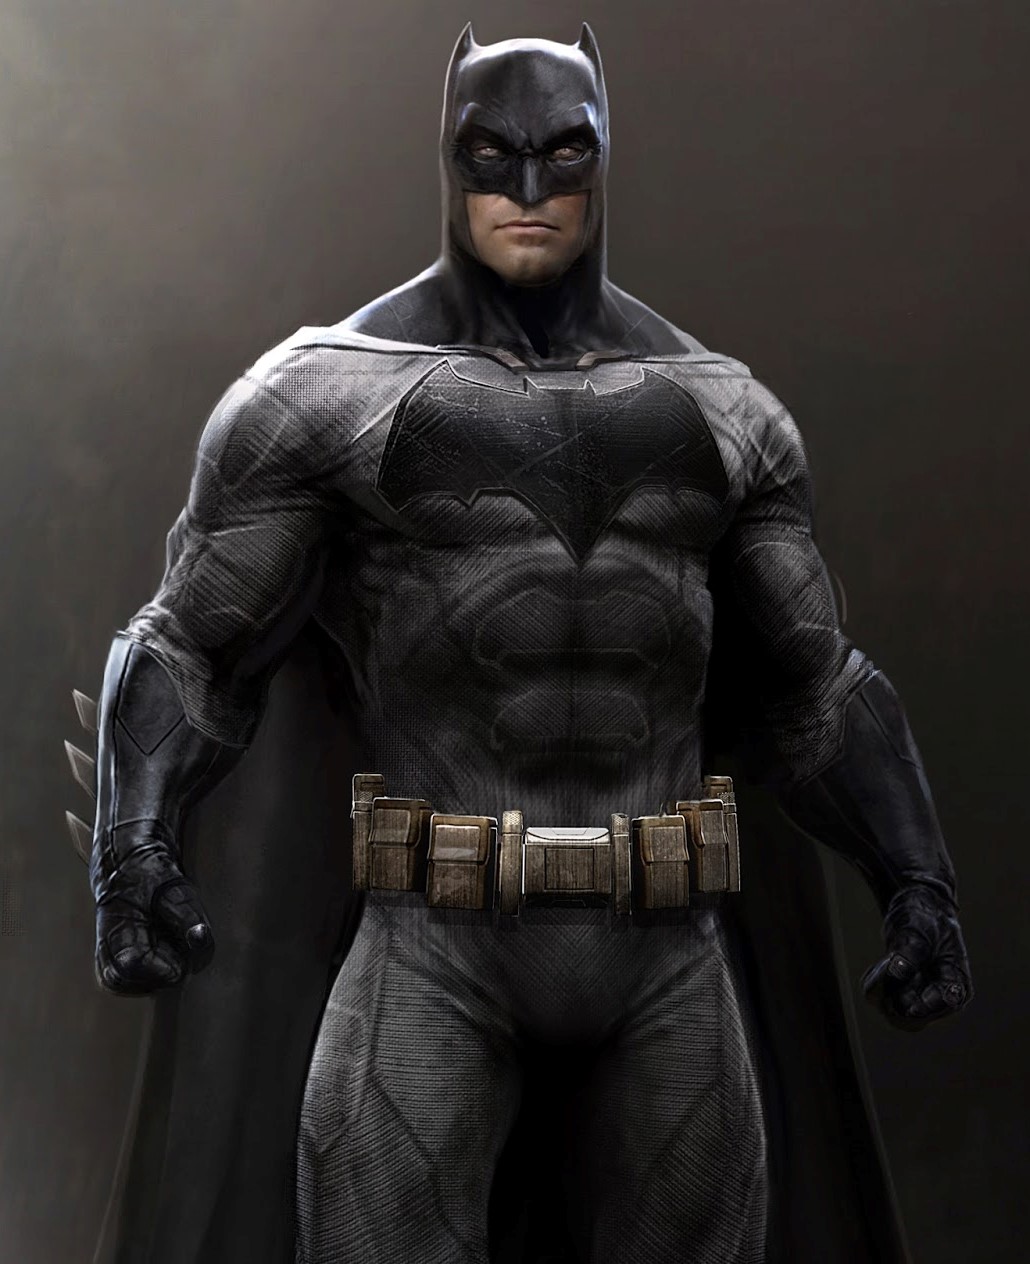 Batman, DC Extended Universe Wiki